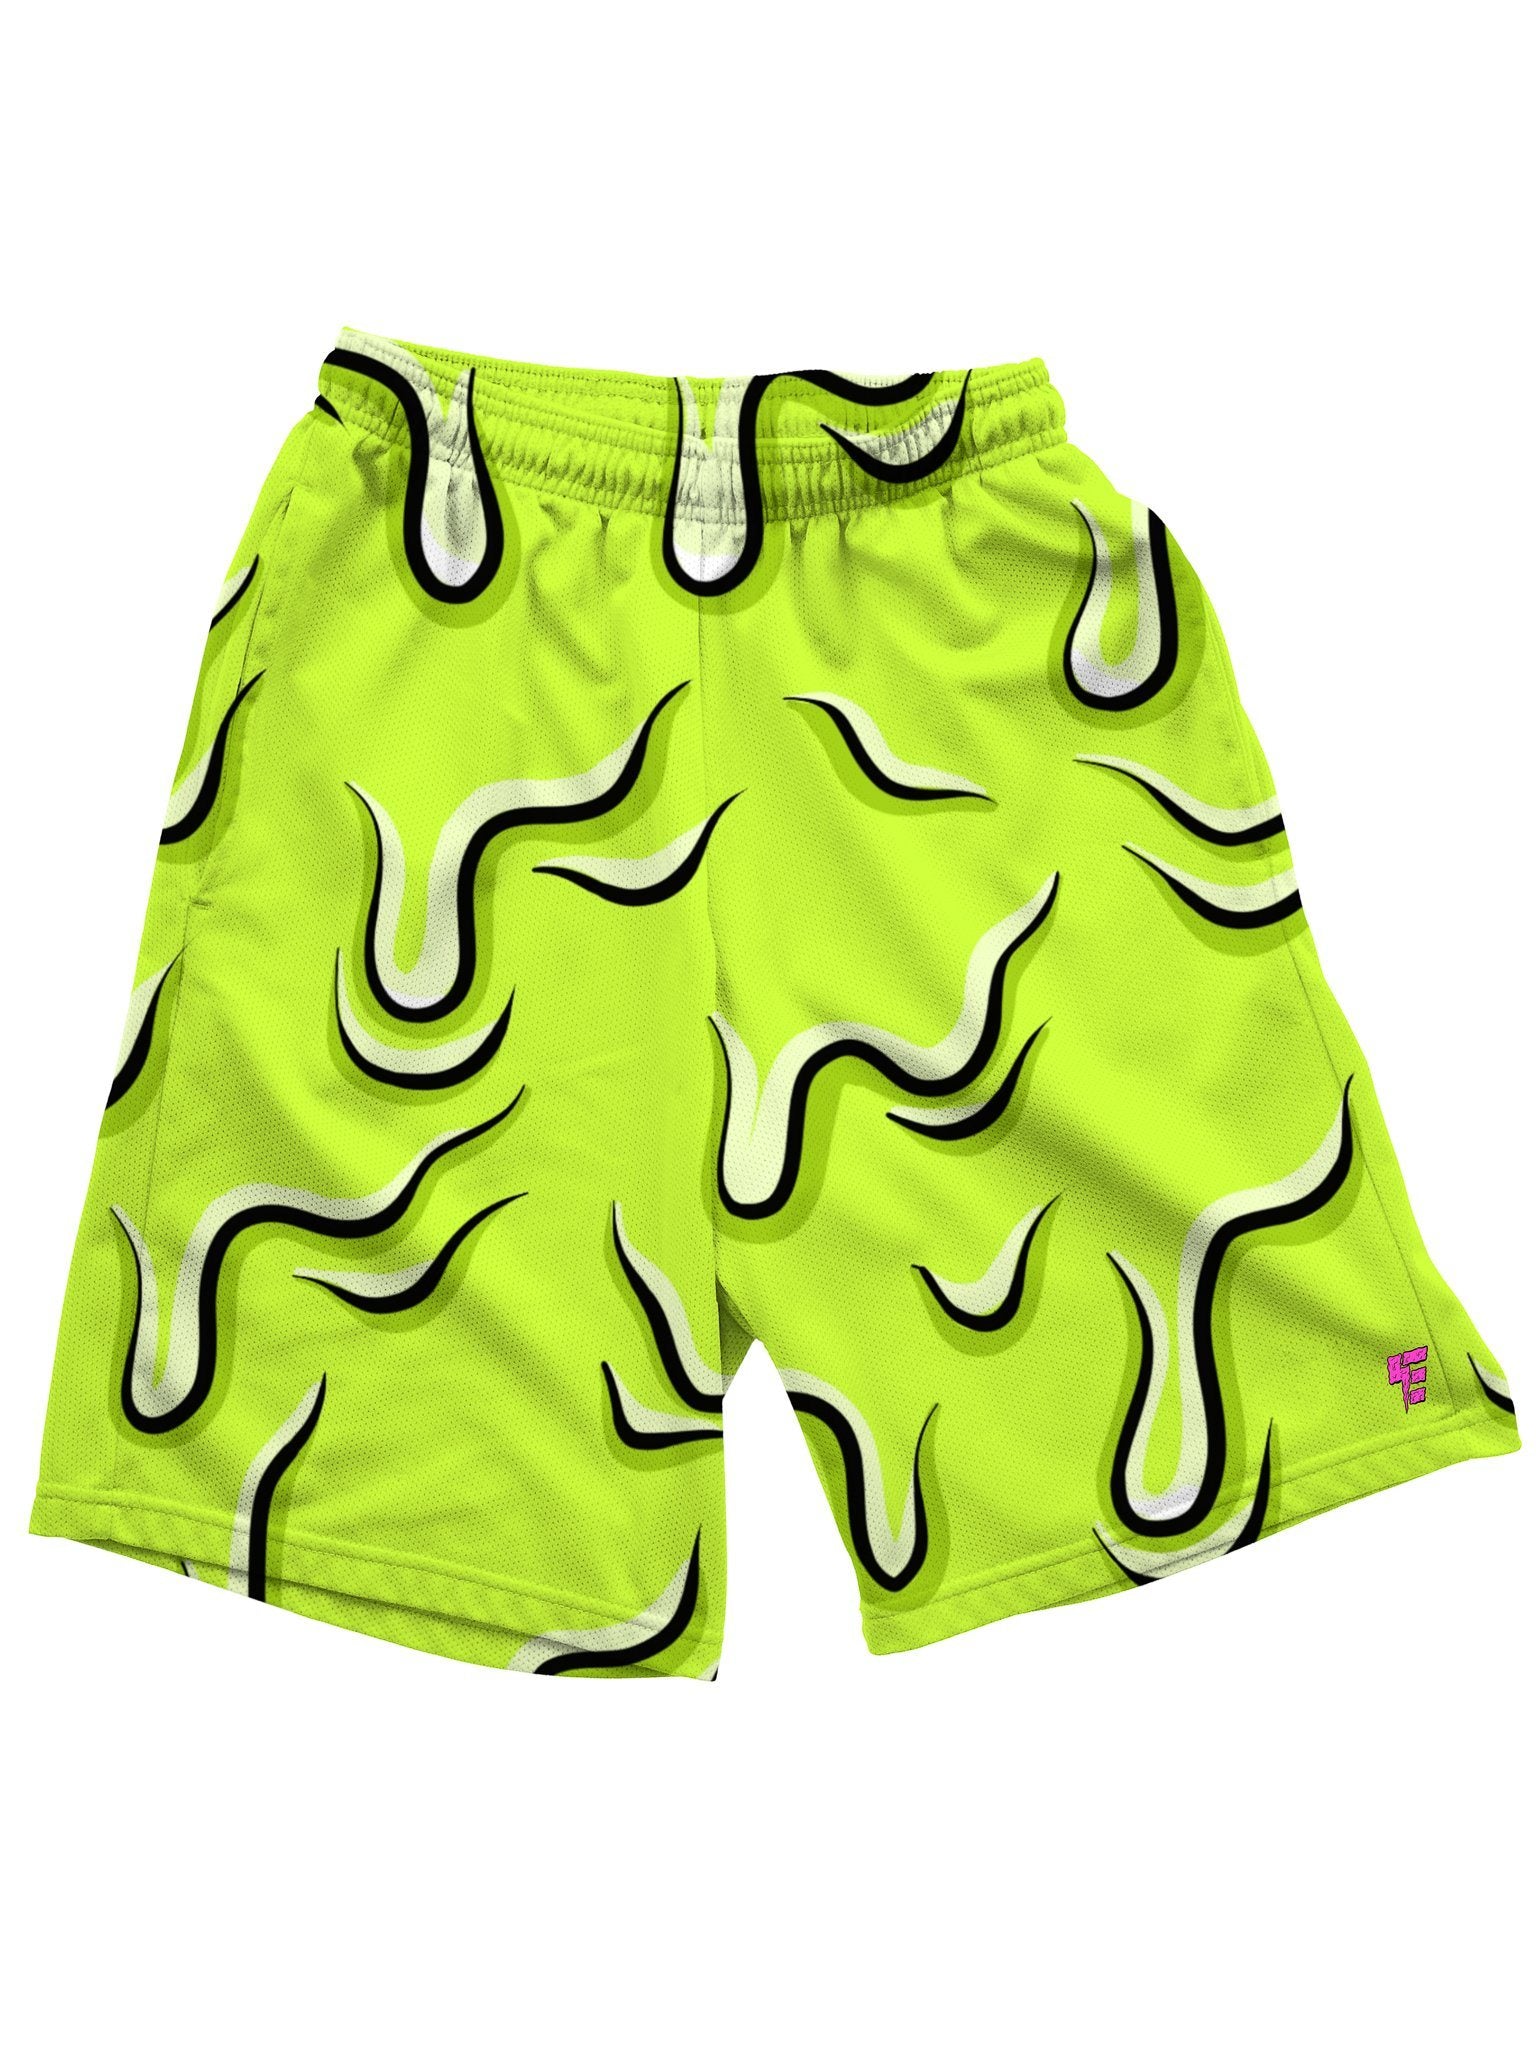 Neon Drippy (Green) Shorts - Electro Threads